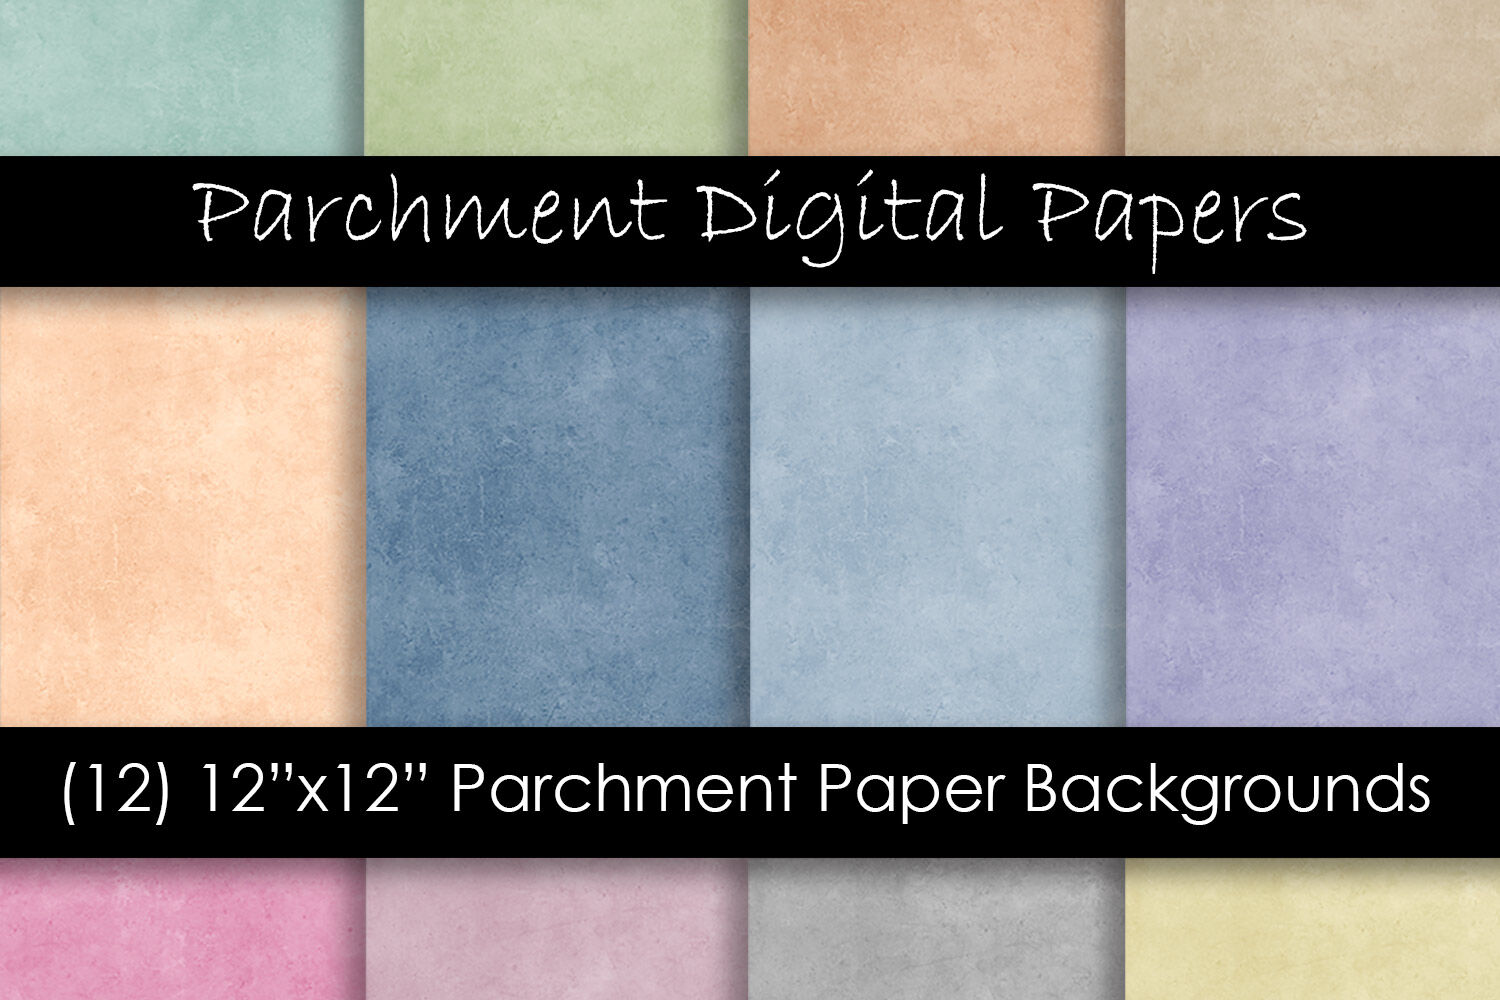 Parchment Paper Texture Parchment Digital Paper Background By Gjsart Thehungryjpeg Com